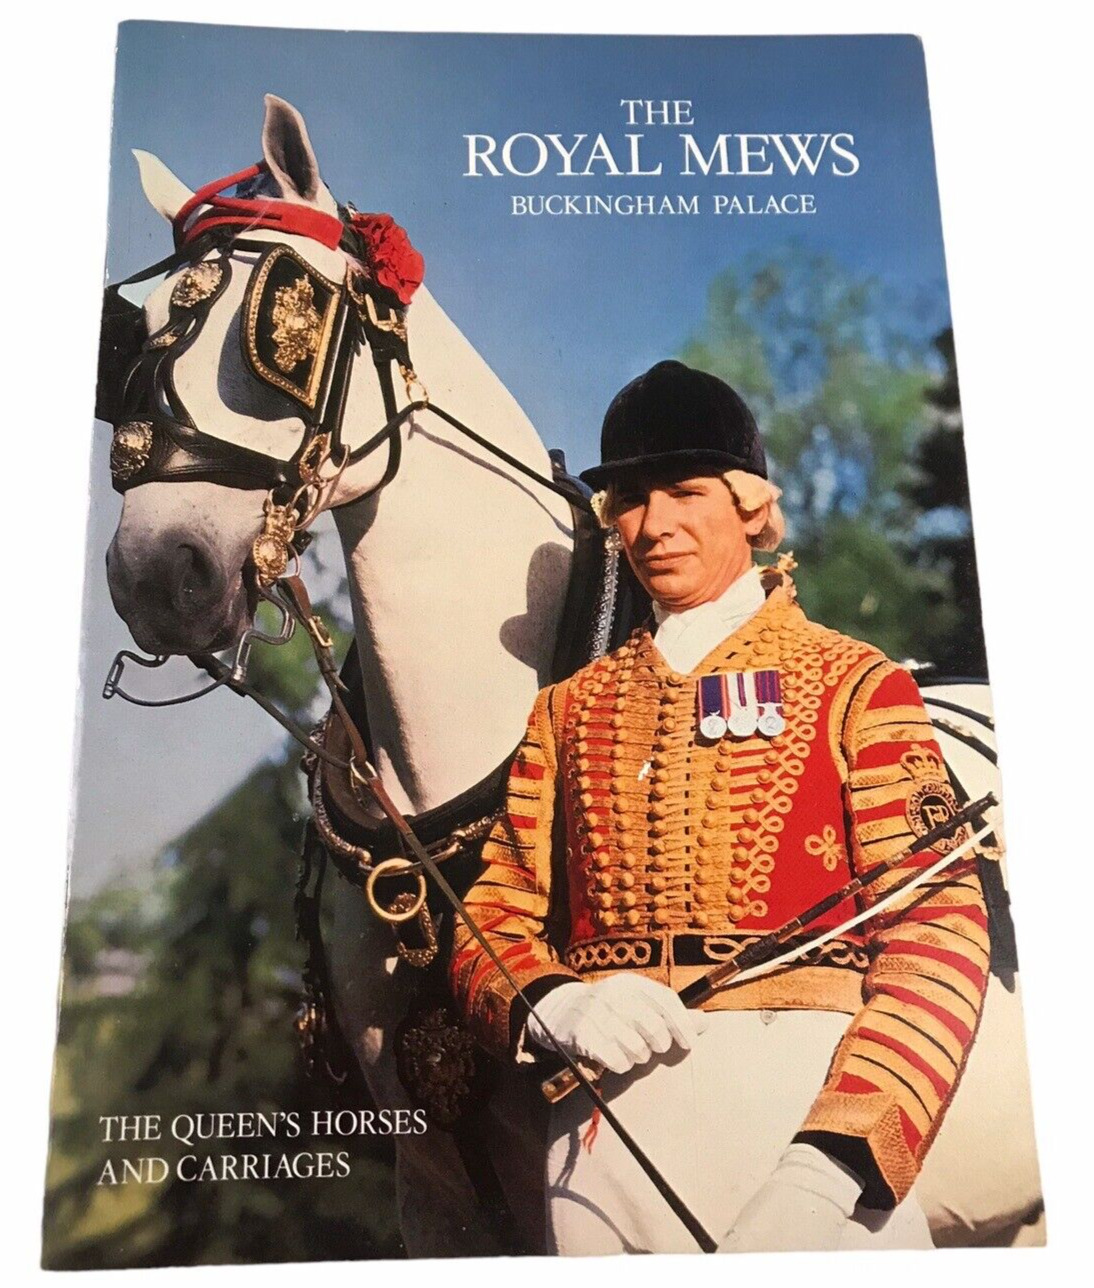 1979 THE ROYAL MEWS Buckingham Palace Travel Guide Souvenir Book